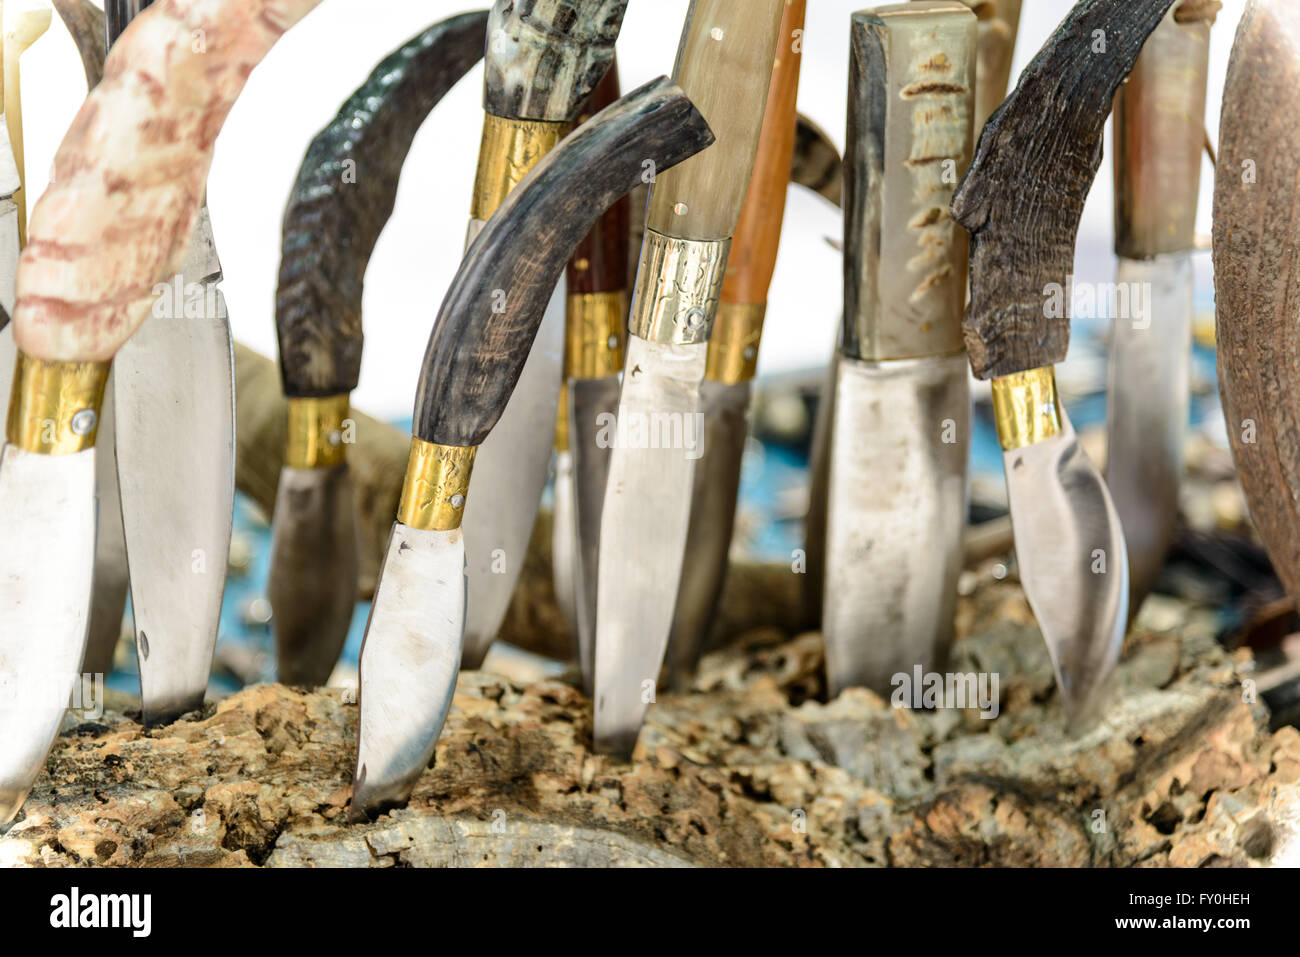 File: 12 - ITALY - Arburese - coltello sardo per scuoiare bovini -  skinning knife from Sardinia (Italy) 2.JPG - Wikimedia Commons